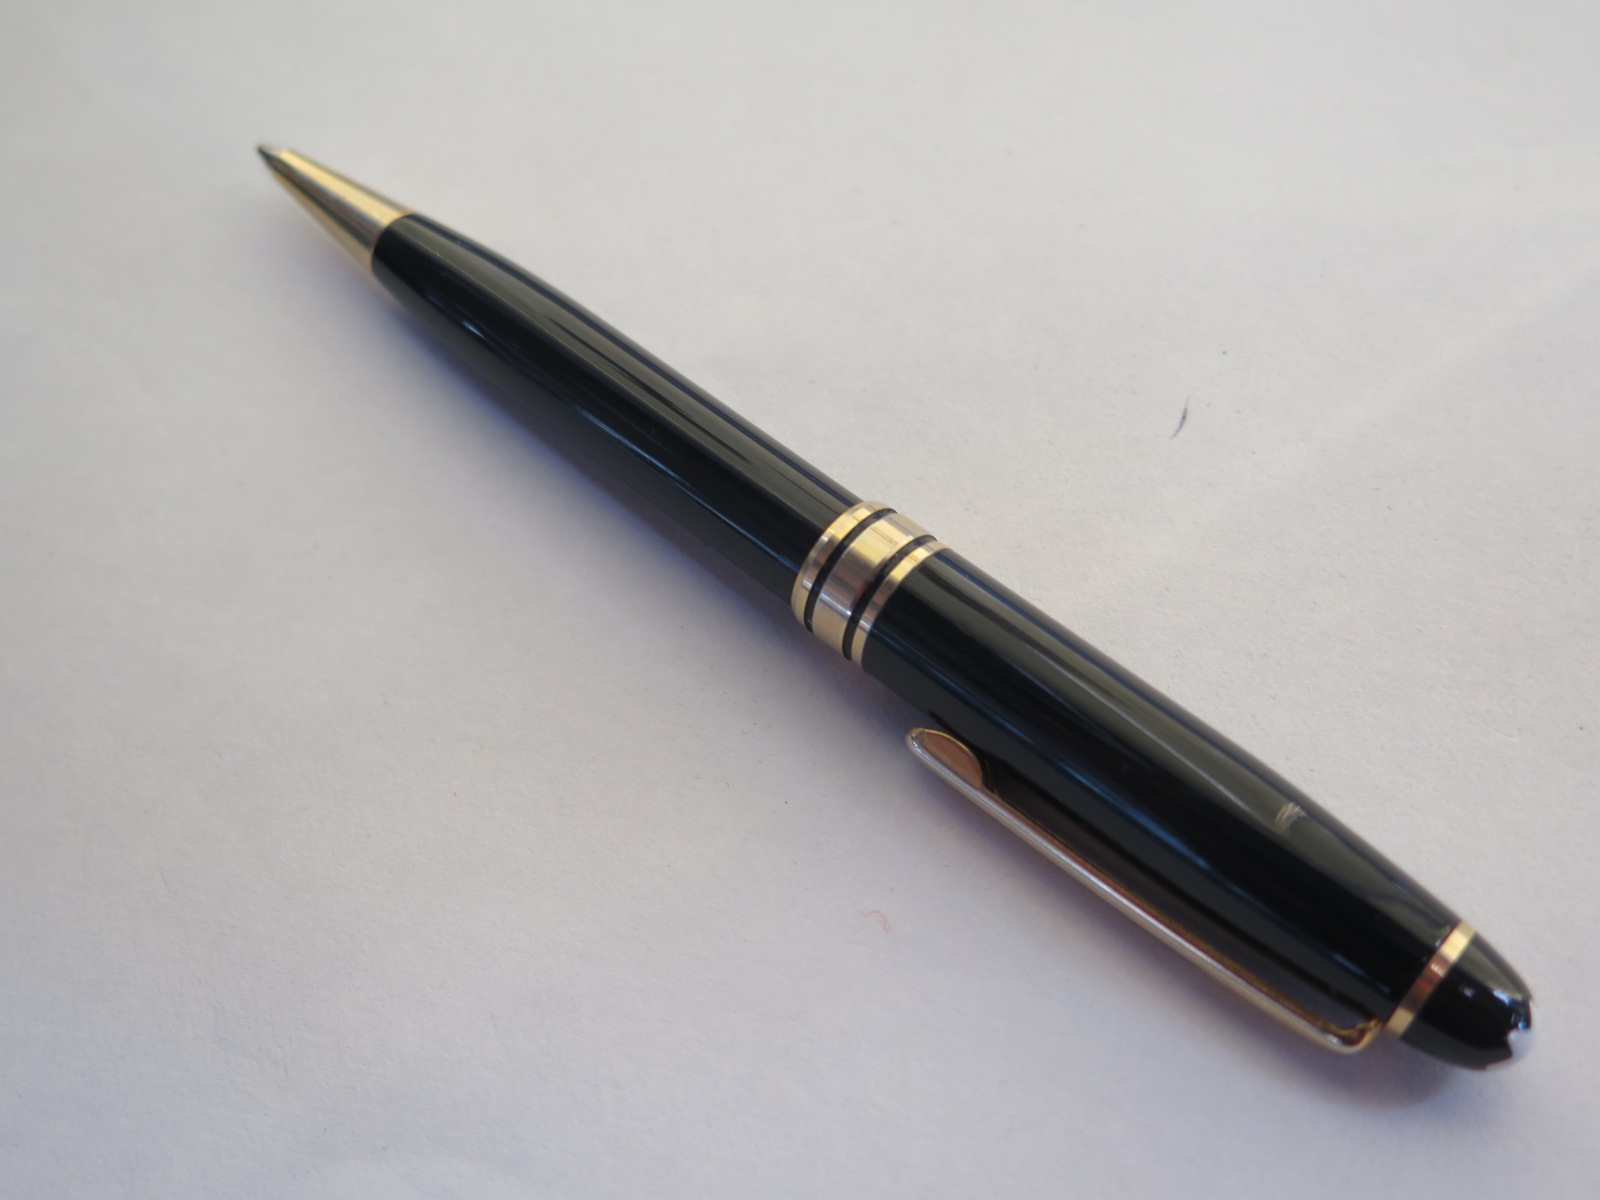 A Mont Blanc ballpoint pen, no box - working, minor usage wear